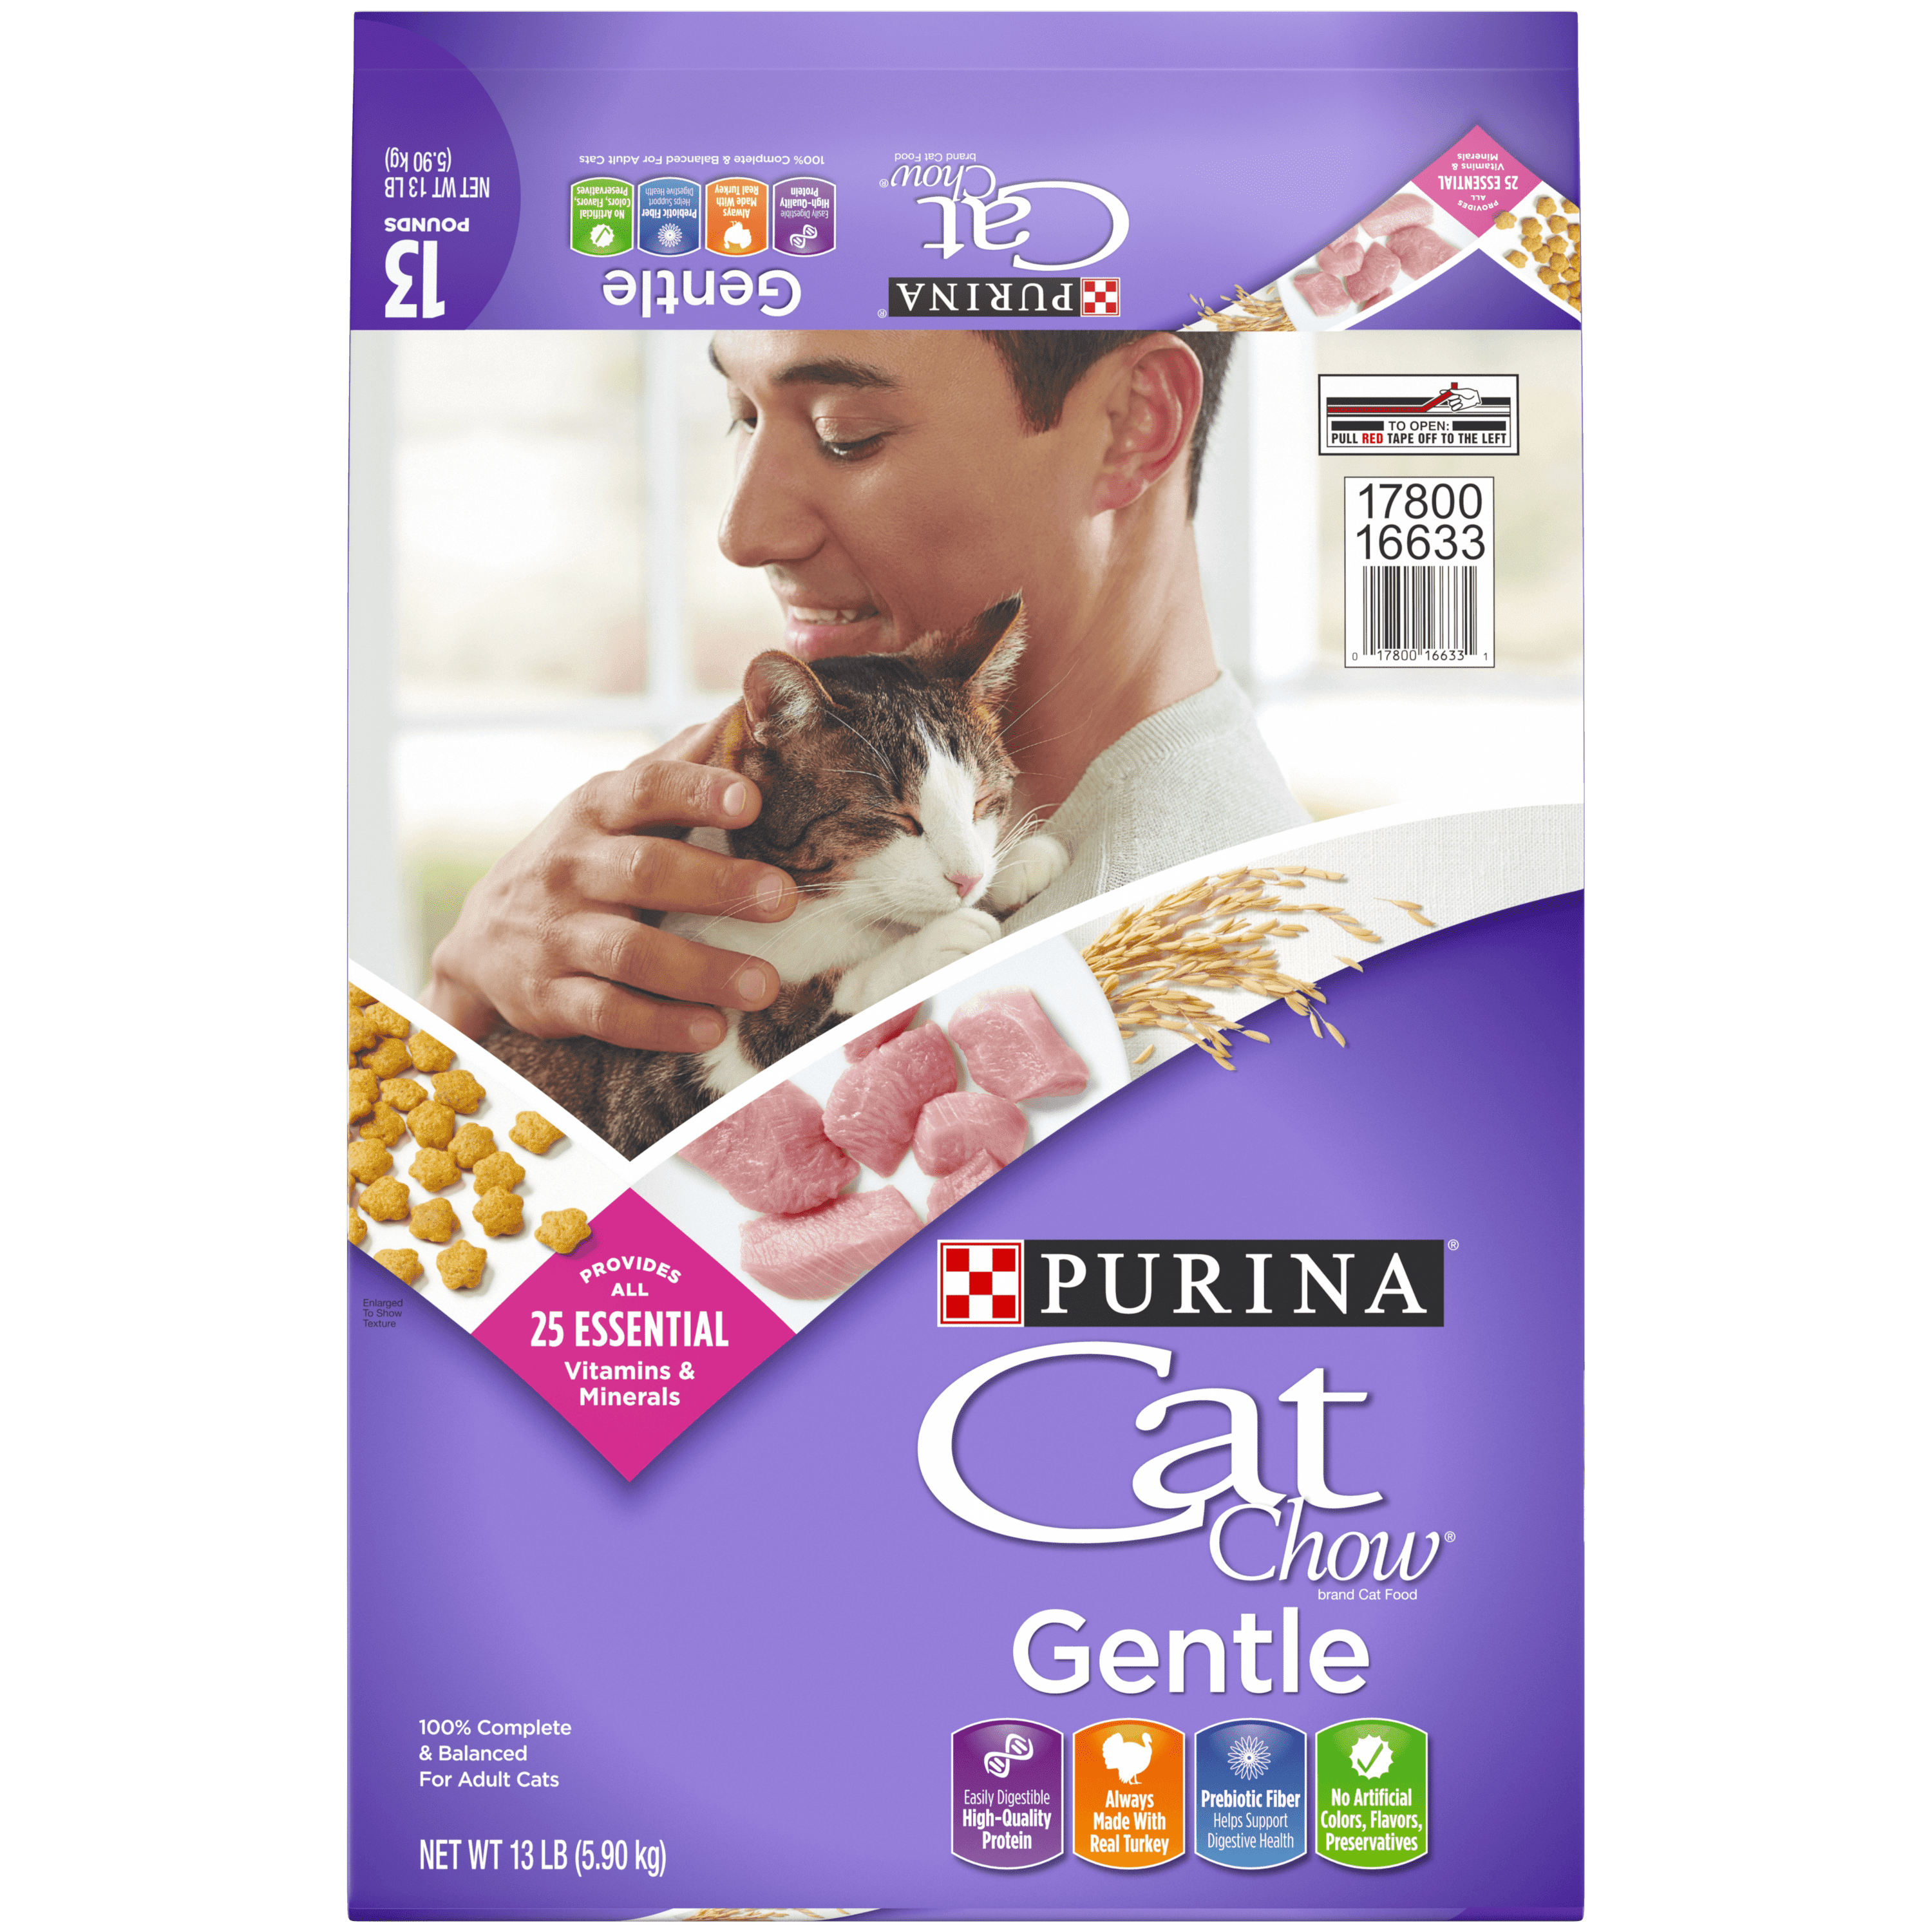 Purina Cat Chow Sensitive Stomach Dry Cat Food, Gentle, 13 lb. Bag